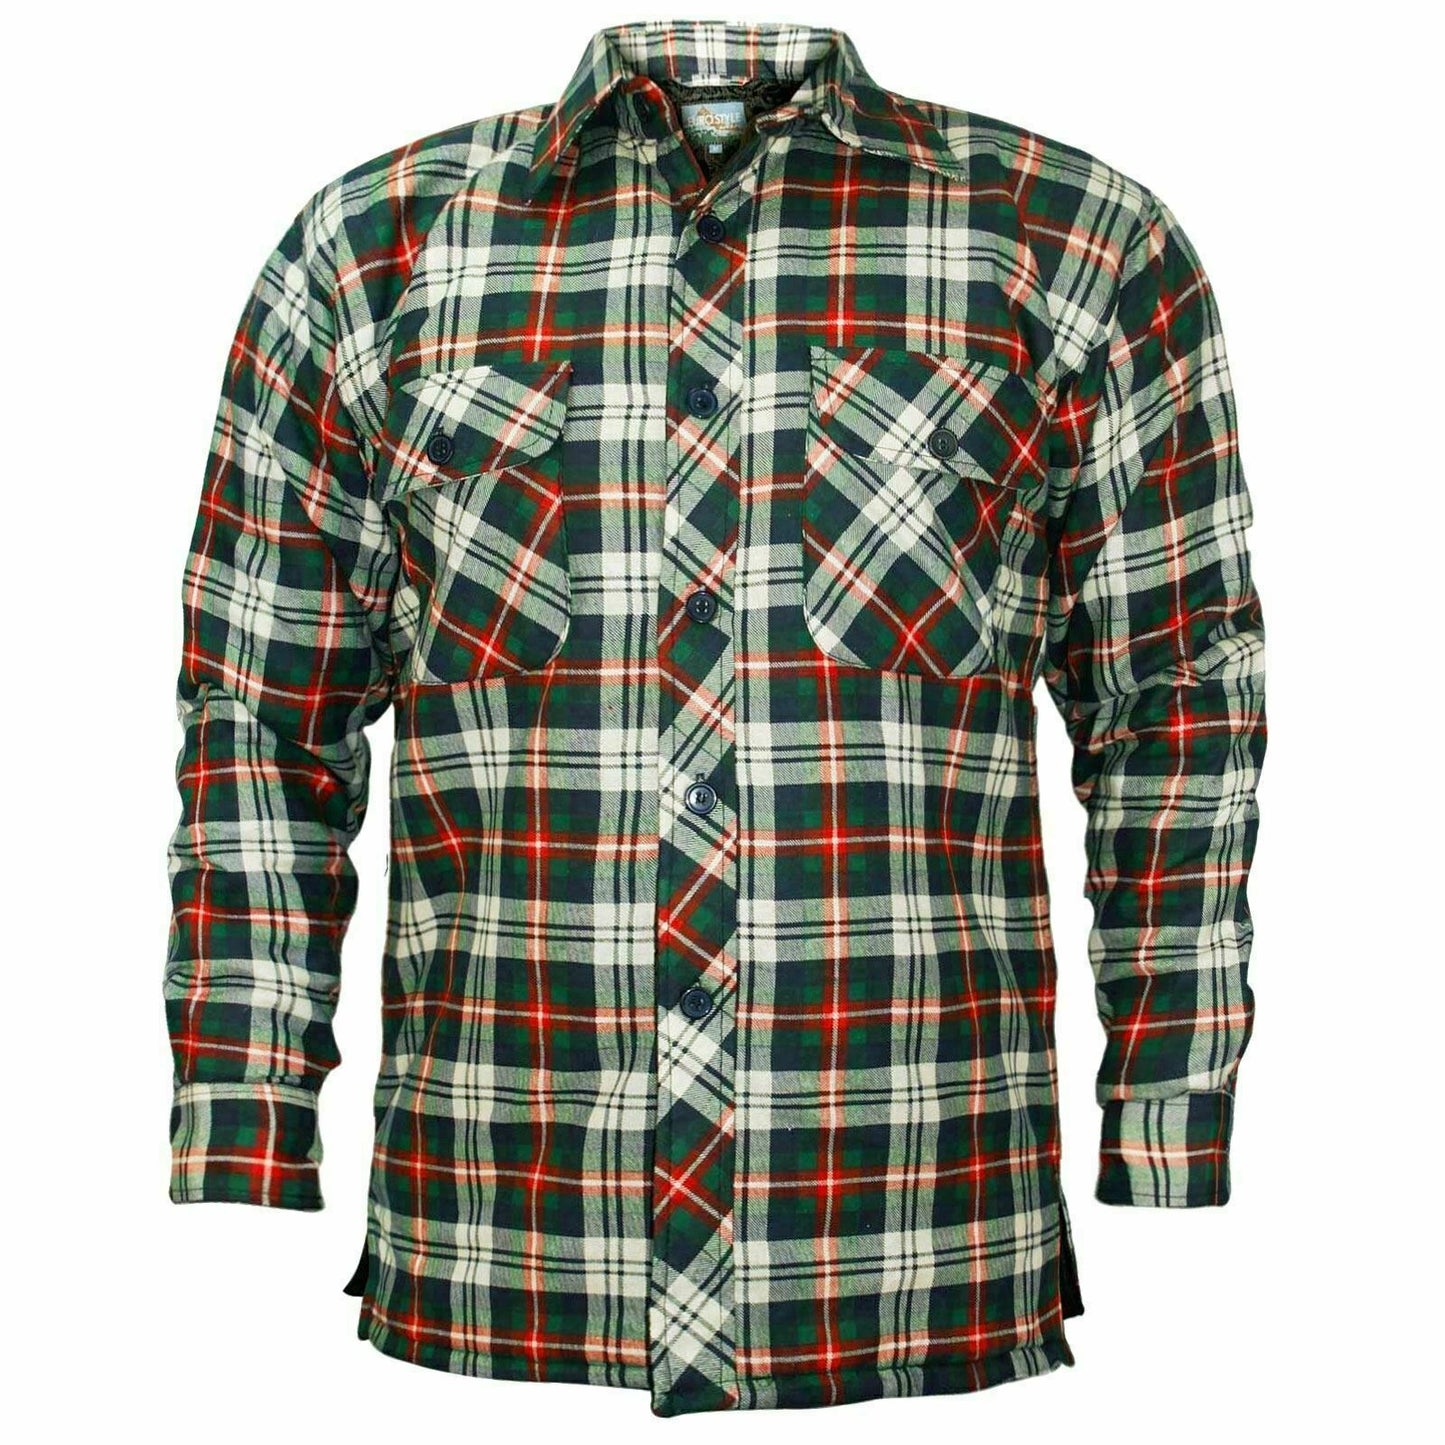 Men's Lumberjack Flannel Shirt In Multi Green & Red Check.